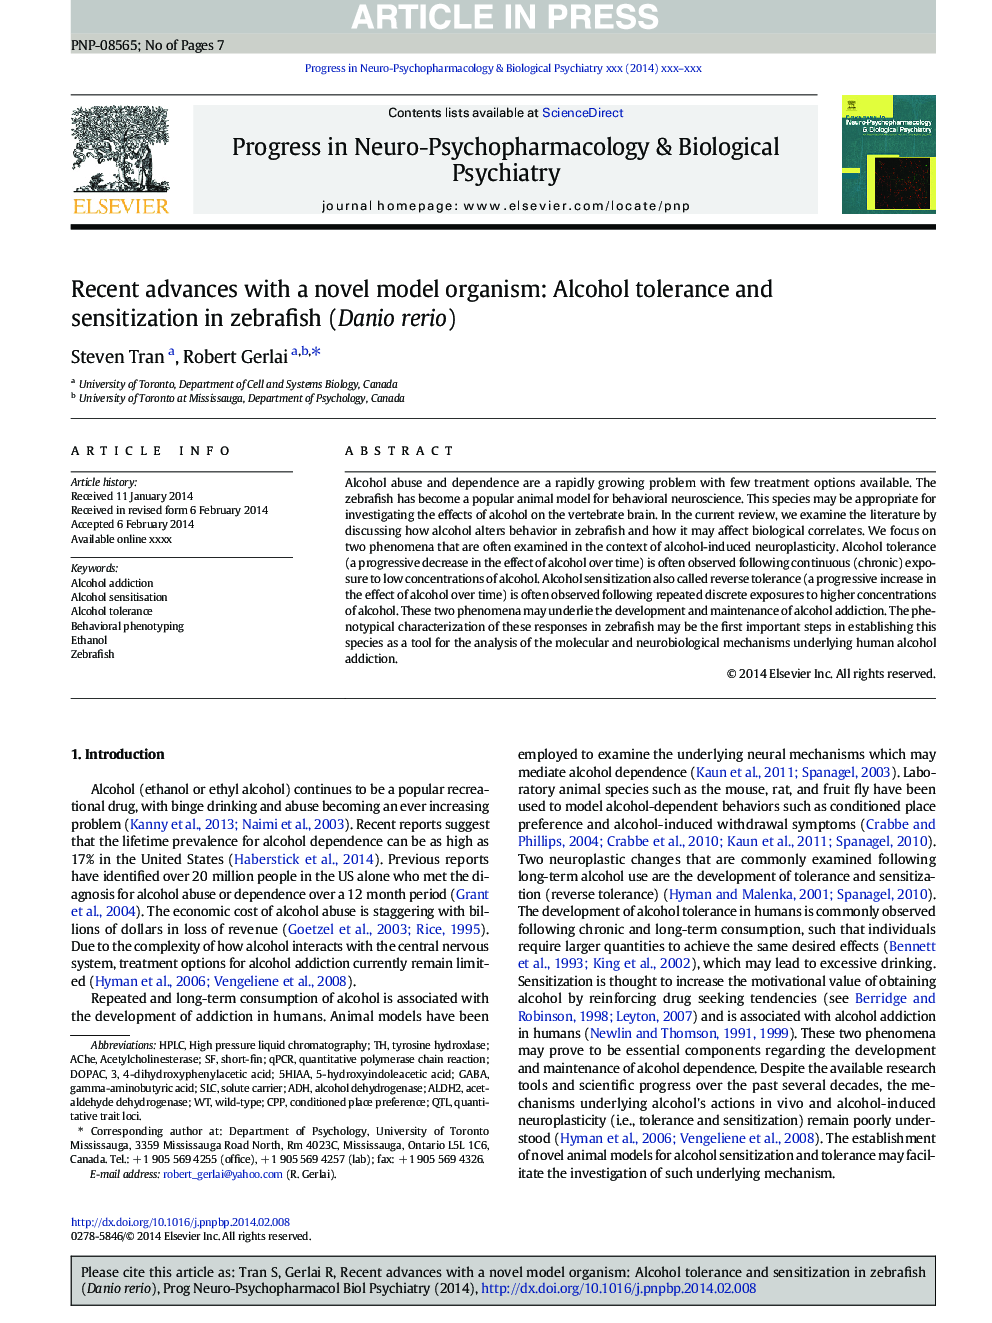 Recent advances with a novel model organism: Alcohol tolerance and sensitization in zebrafish (Danio rerio)